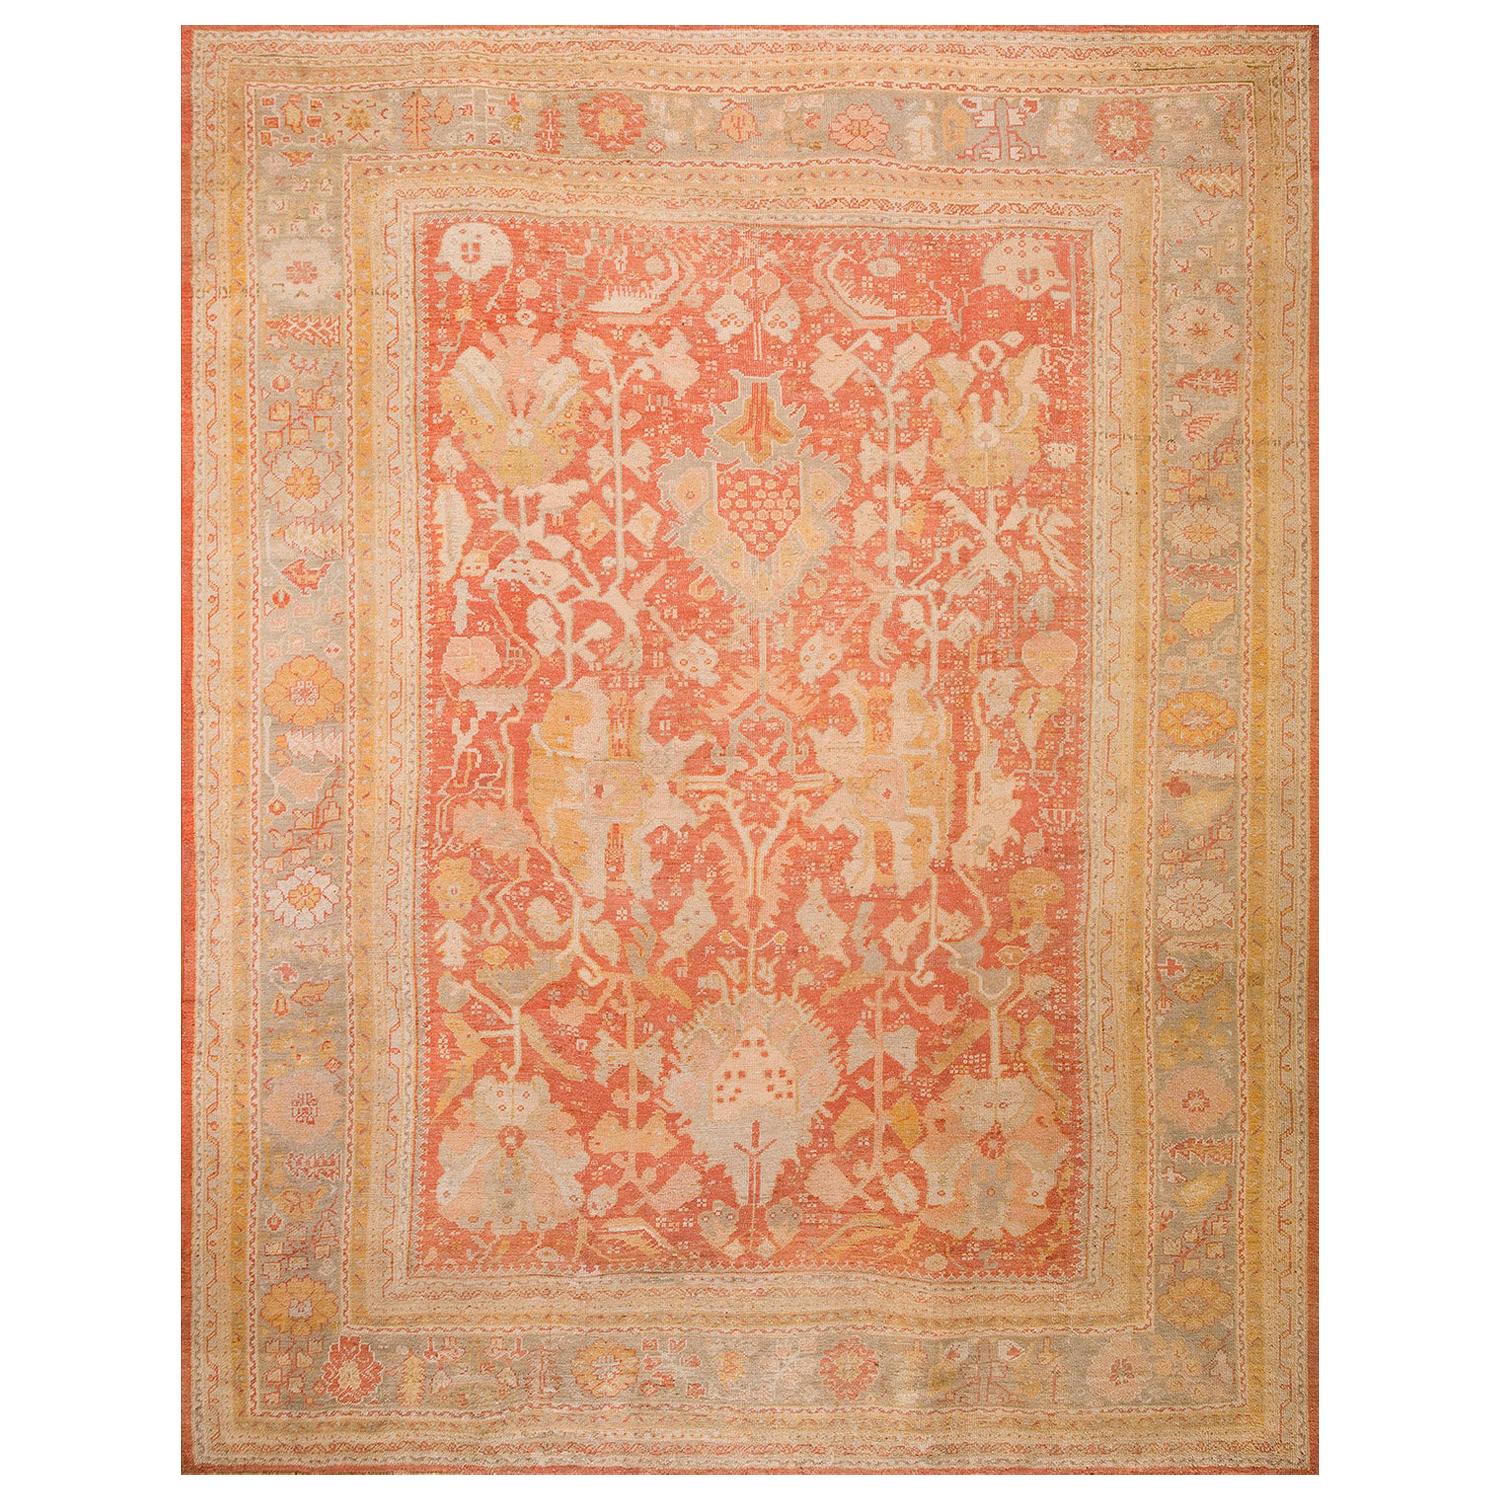 19th Century Turkish Oushak Carpet ( 12' x 15'6" - 365 x 472 )